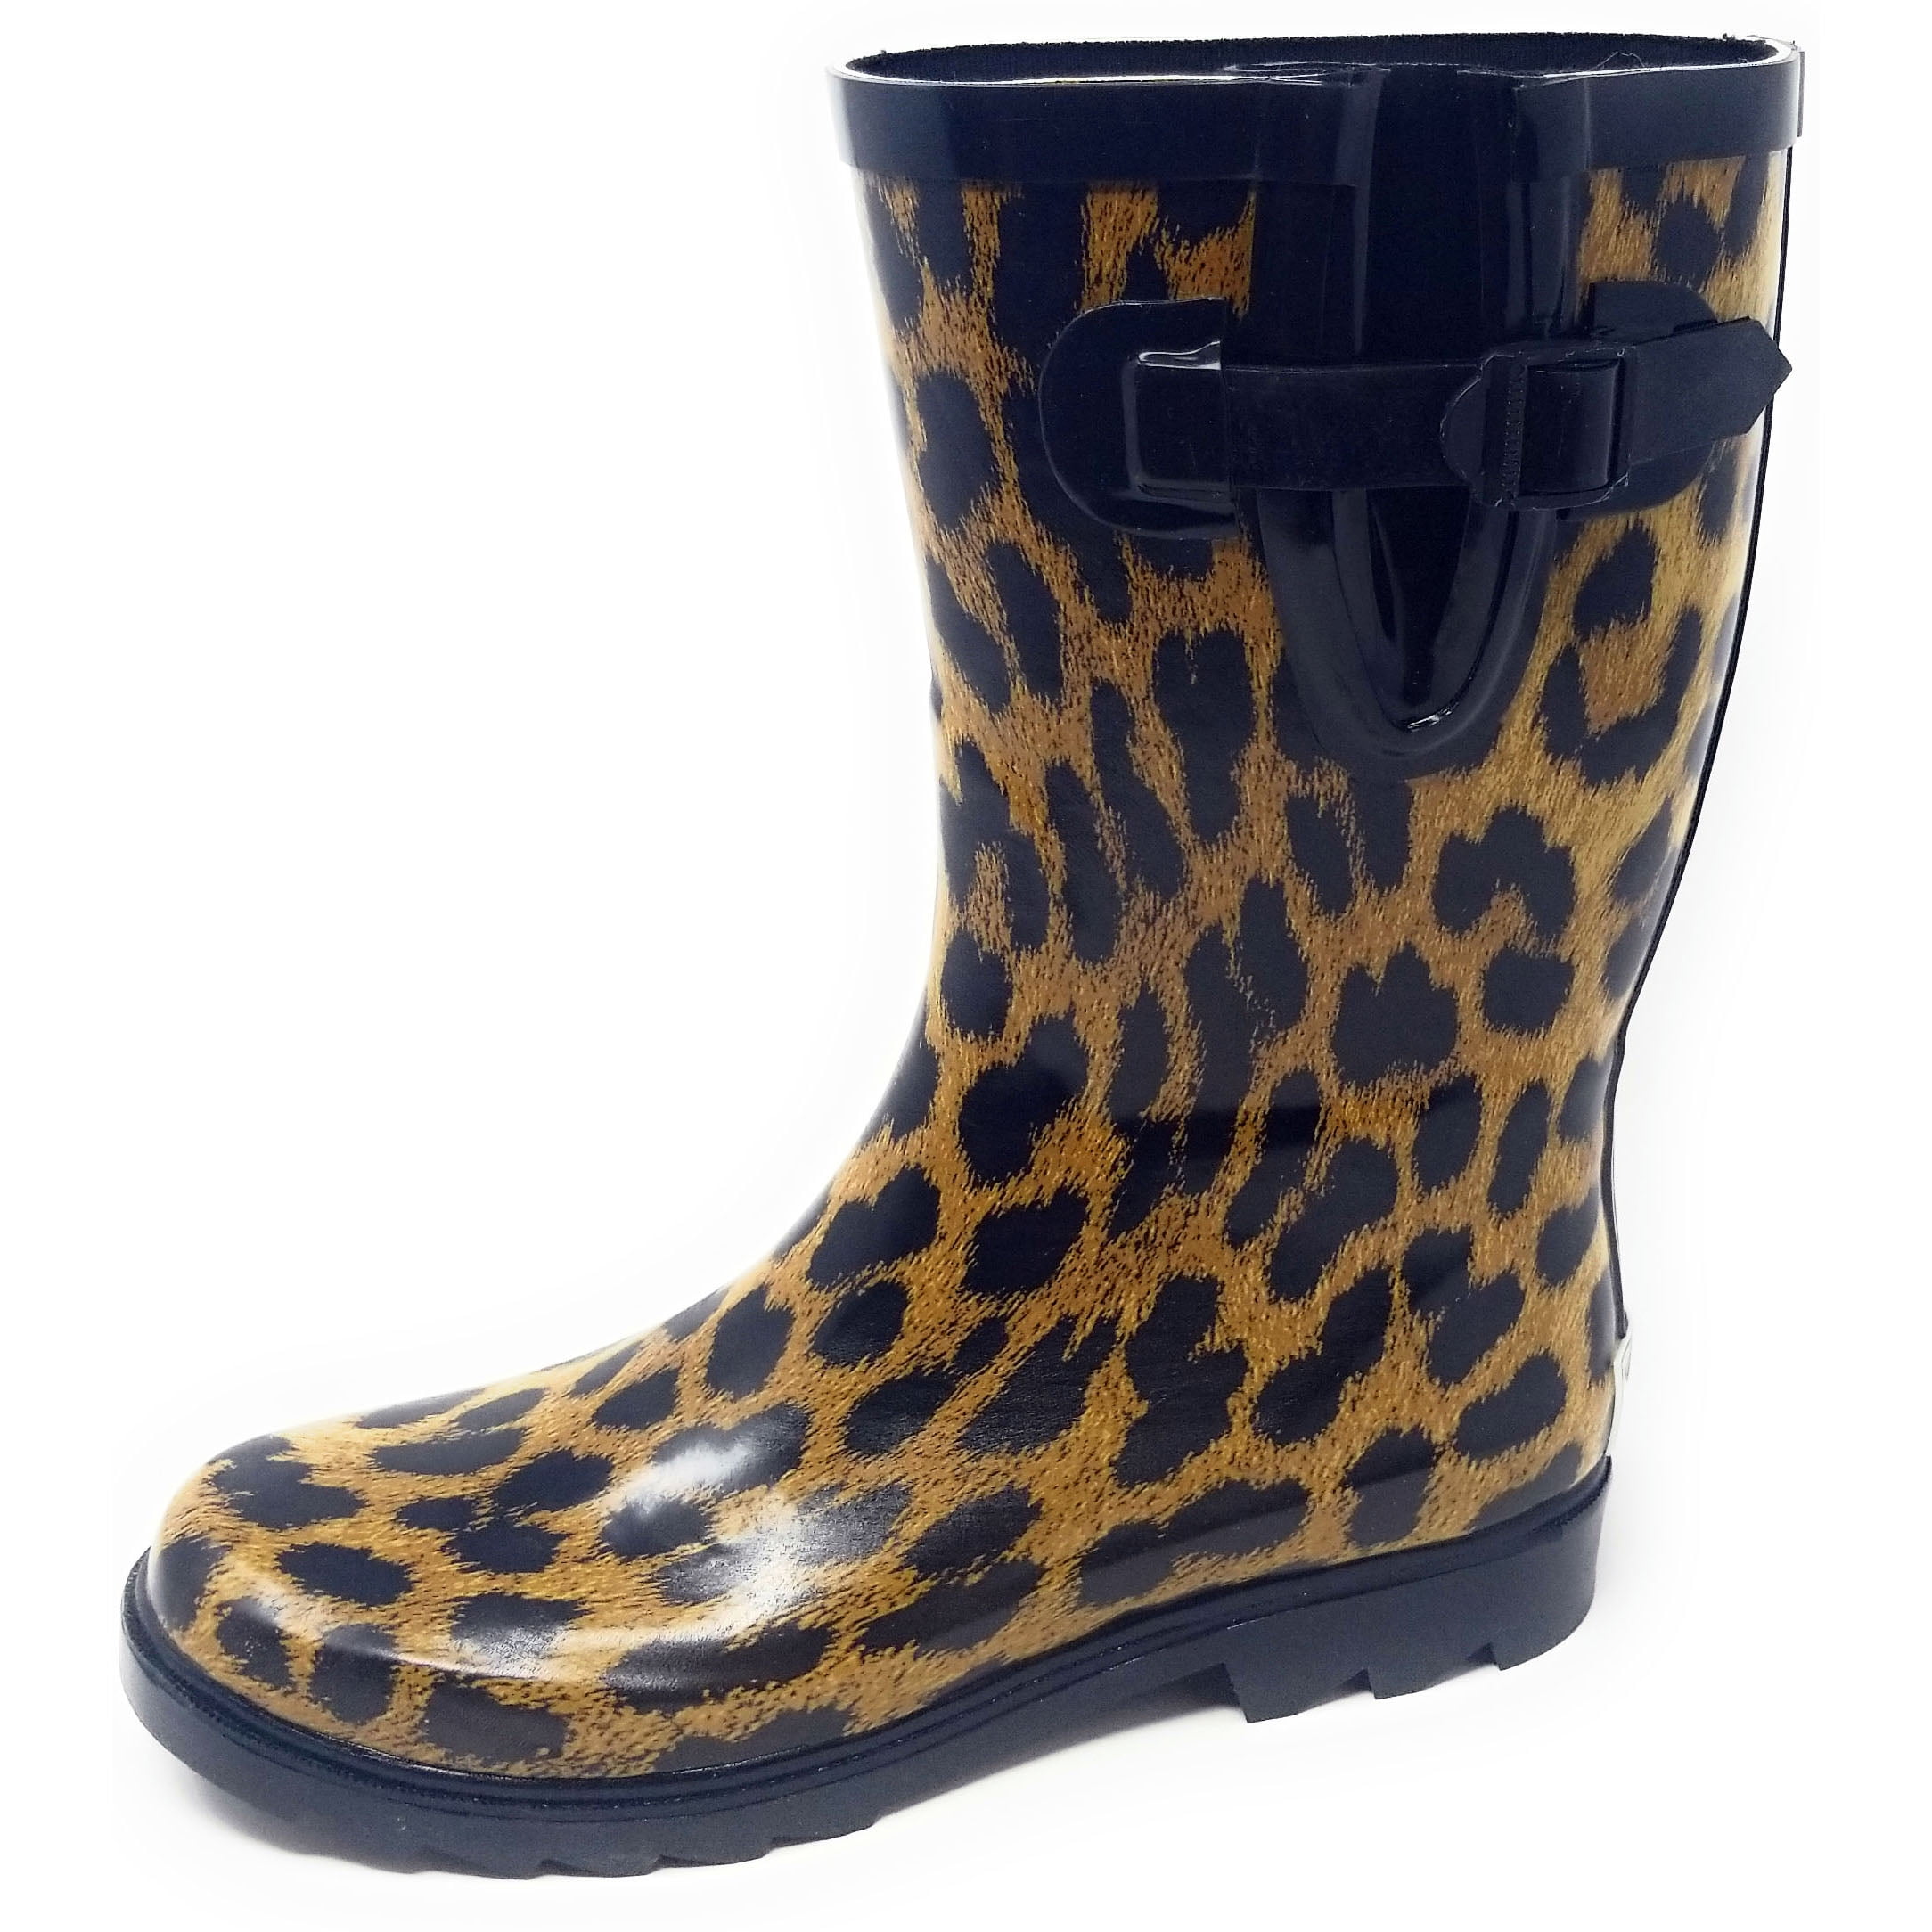 leopard print boots size 11